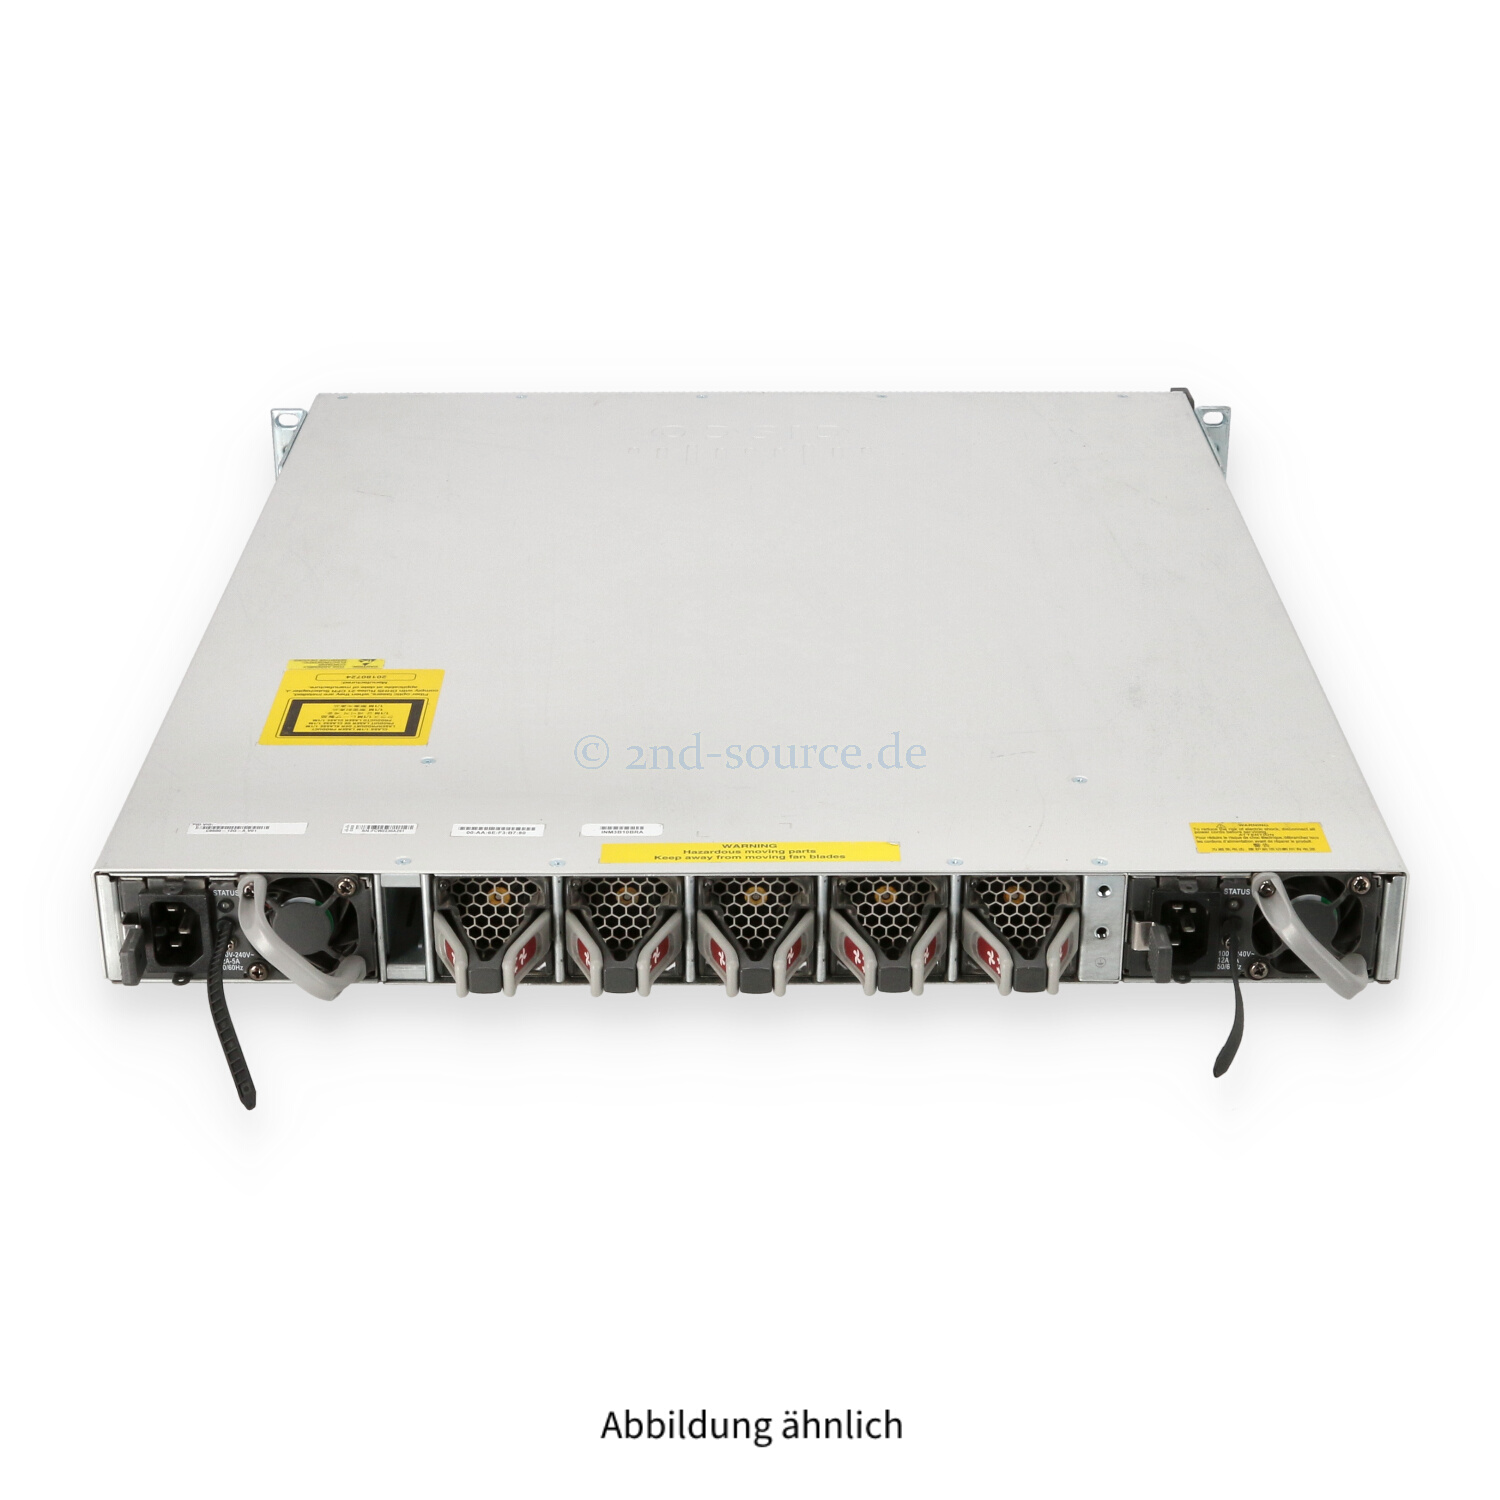 Cisco Catalyst 9500 12x QSFP+ 40GbE 2x 950W Managed Switch C9500-12Q-A